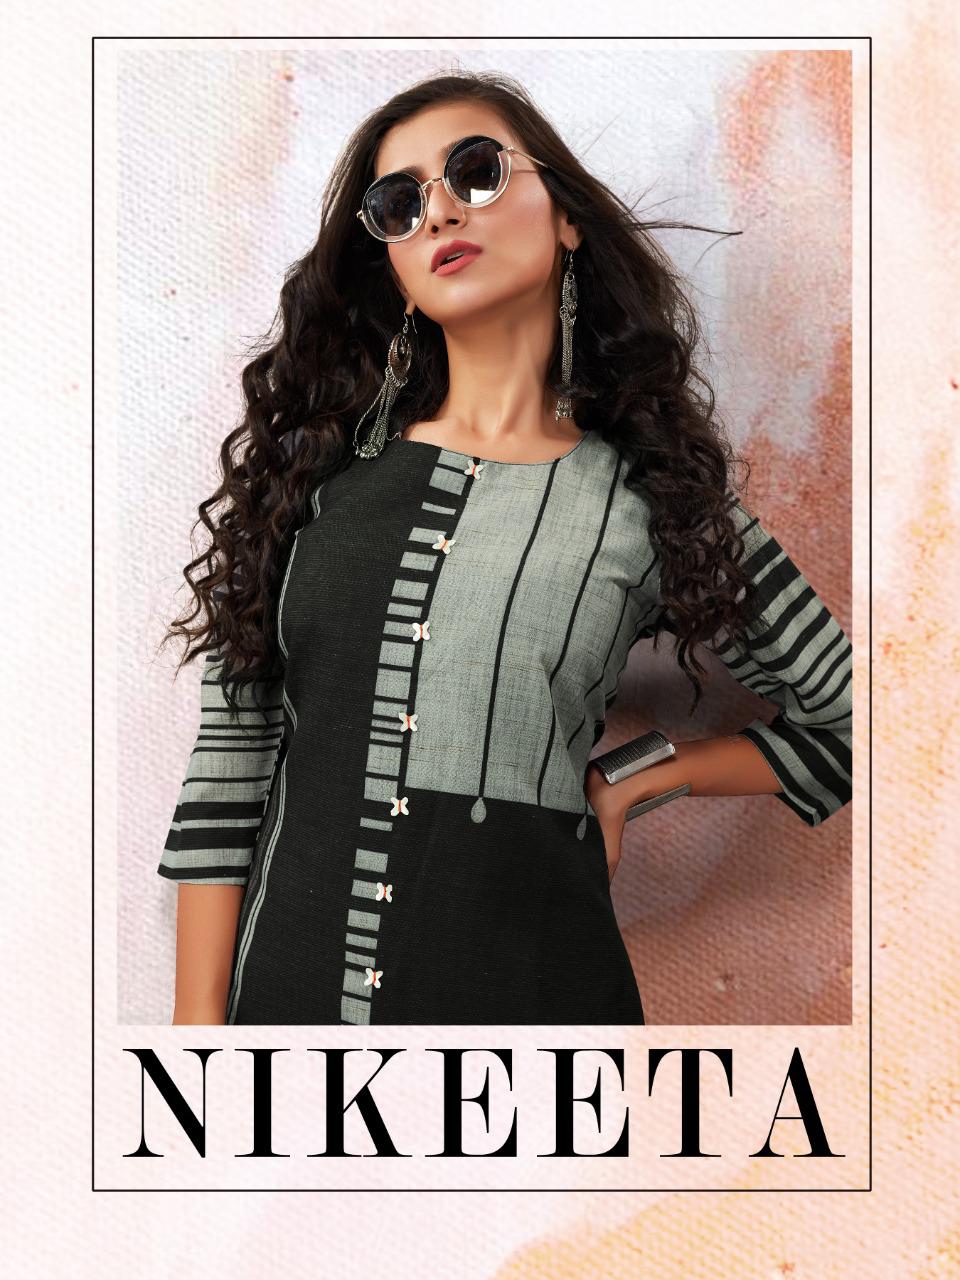 Neha fashion n4u Nikeeta cotton daily wear kurties latest 2020 collection